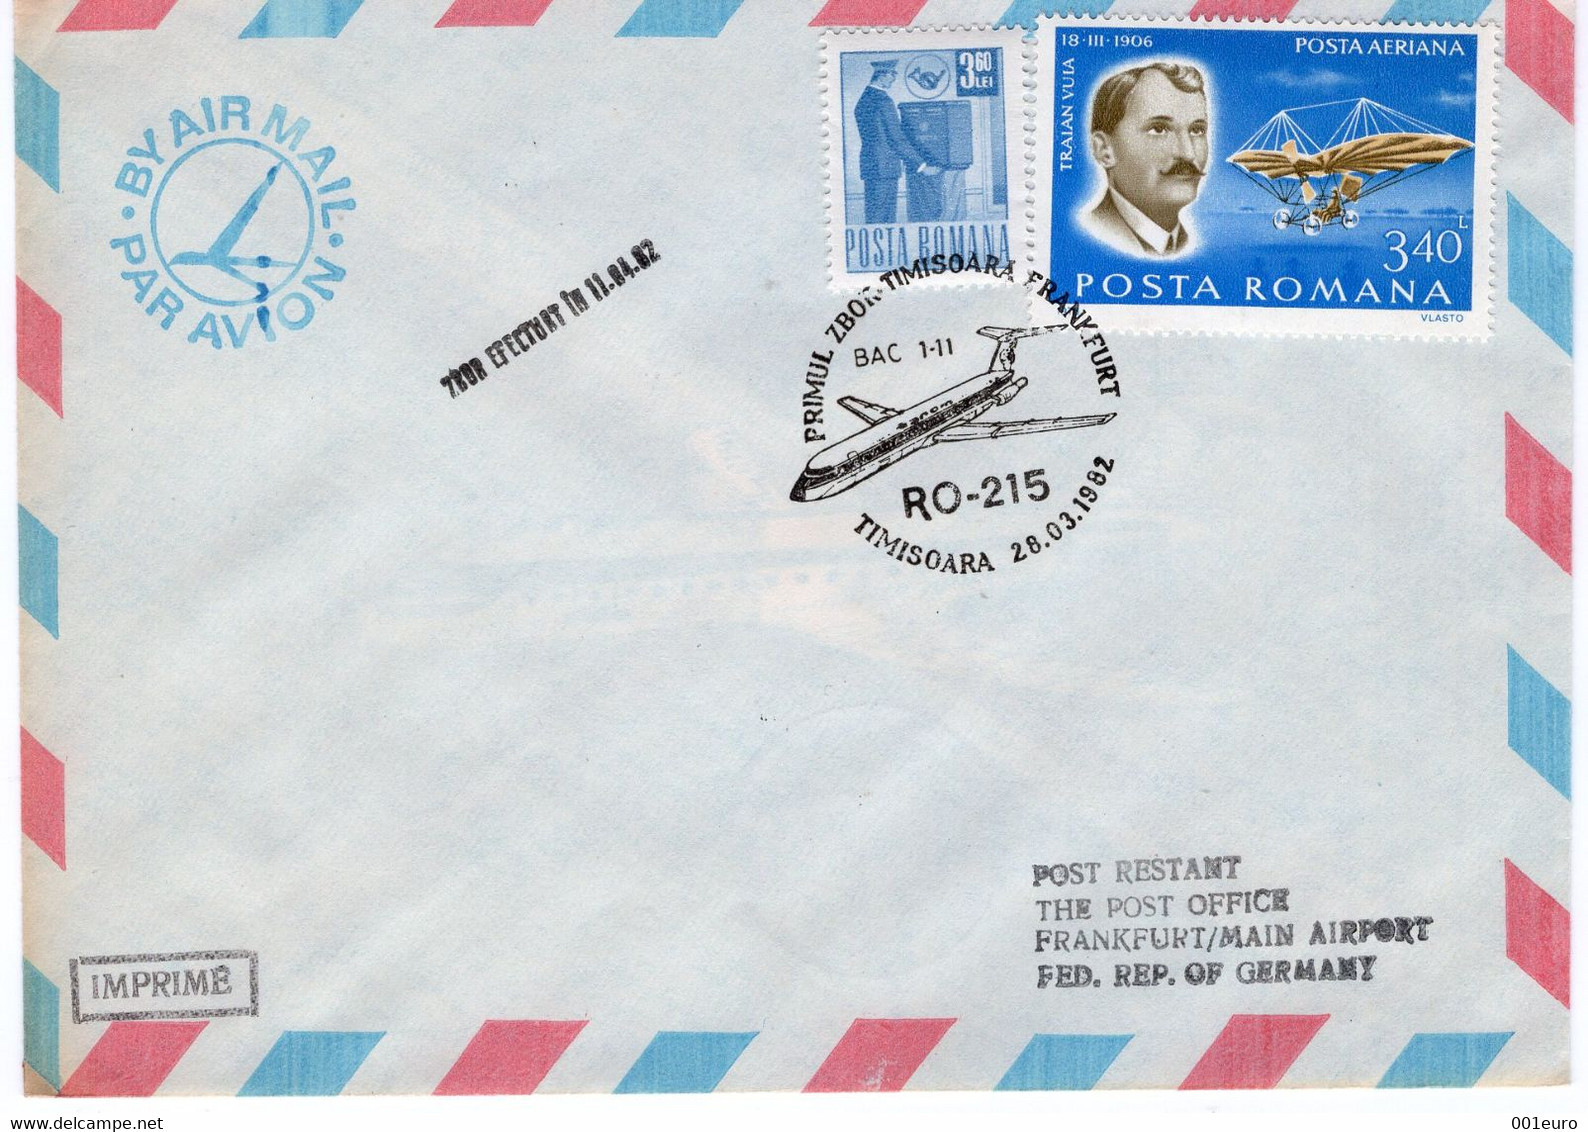 ROMANIA 1982: AEROPHILATELY - FLIGHT TIMISOARA - FRANKFURT, Illustrated Postmark On Cover  - Registered Shipping! - Postmark Collection